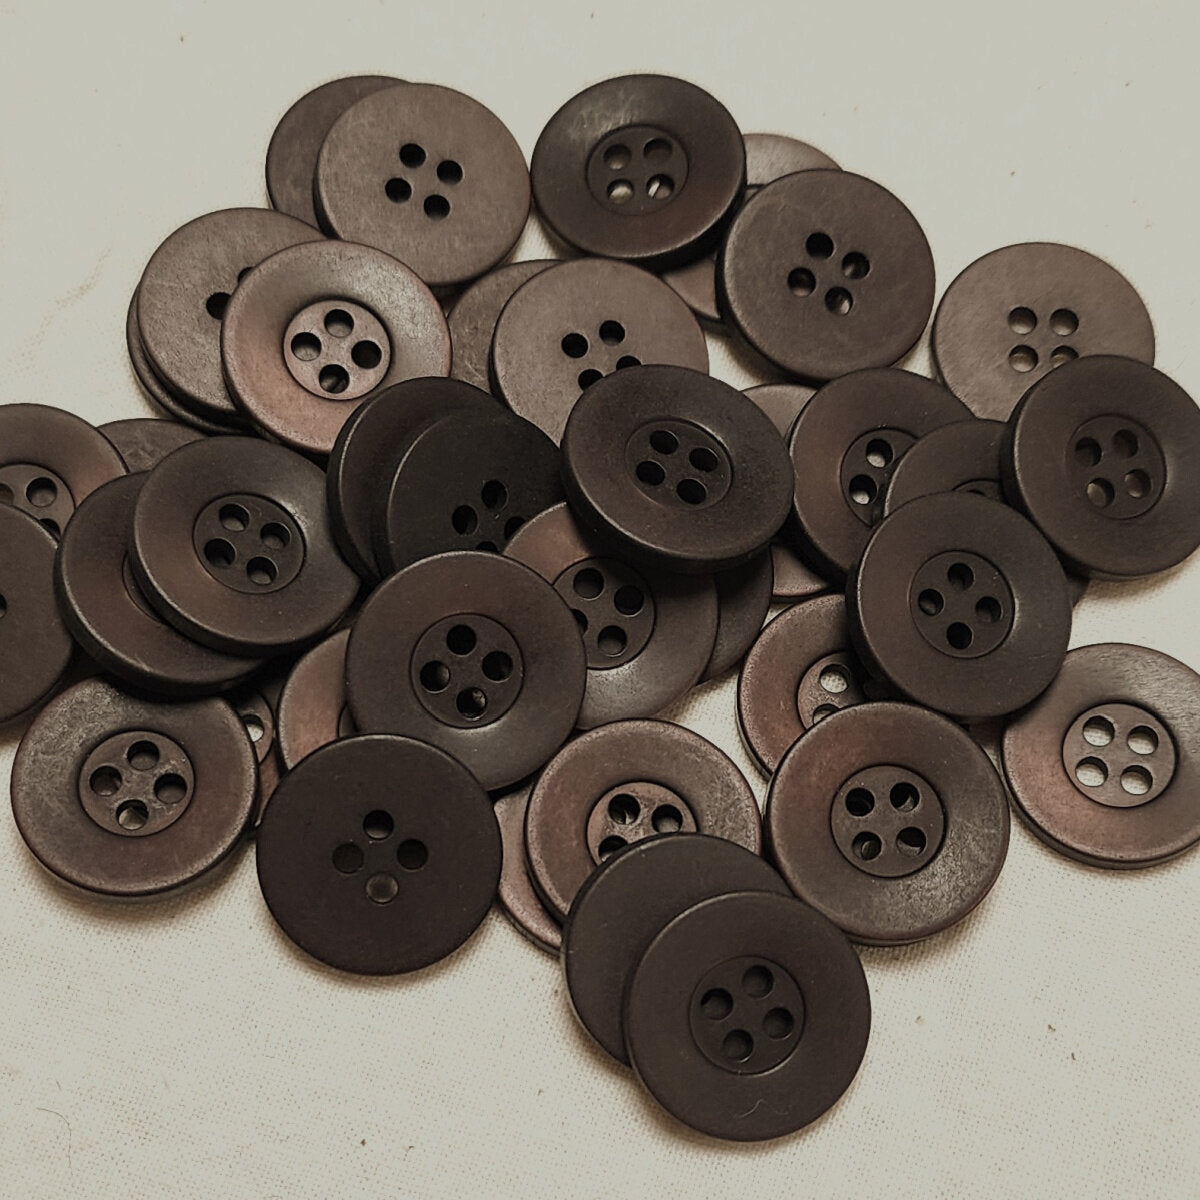 Buttons #16 - 19 mm